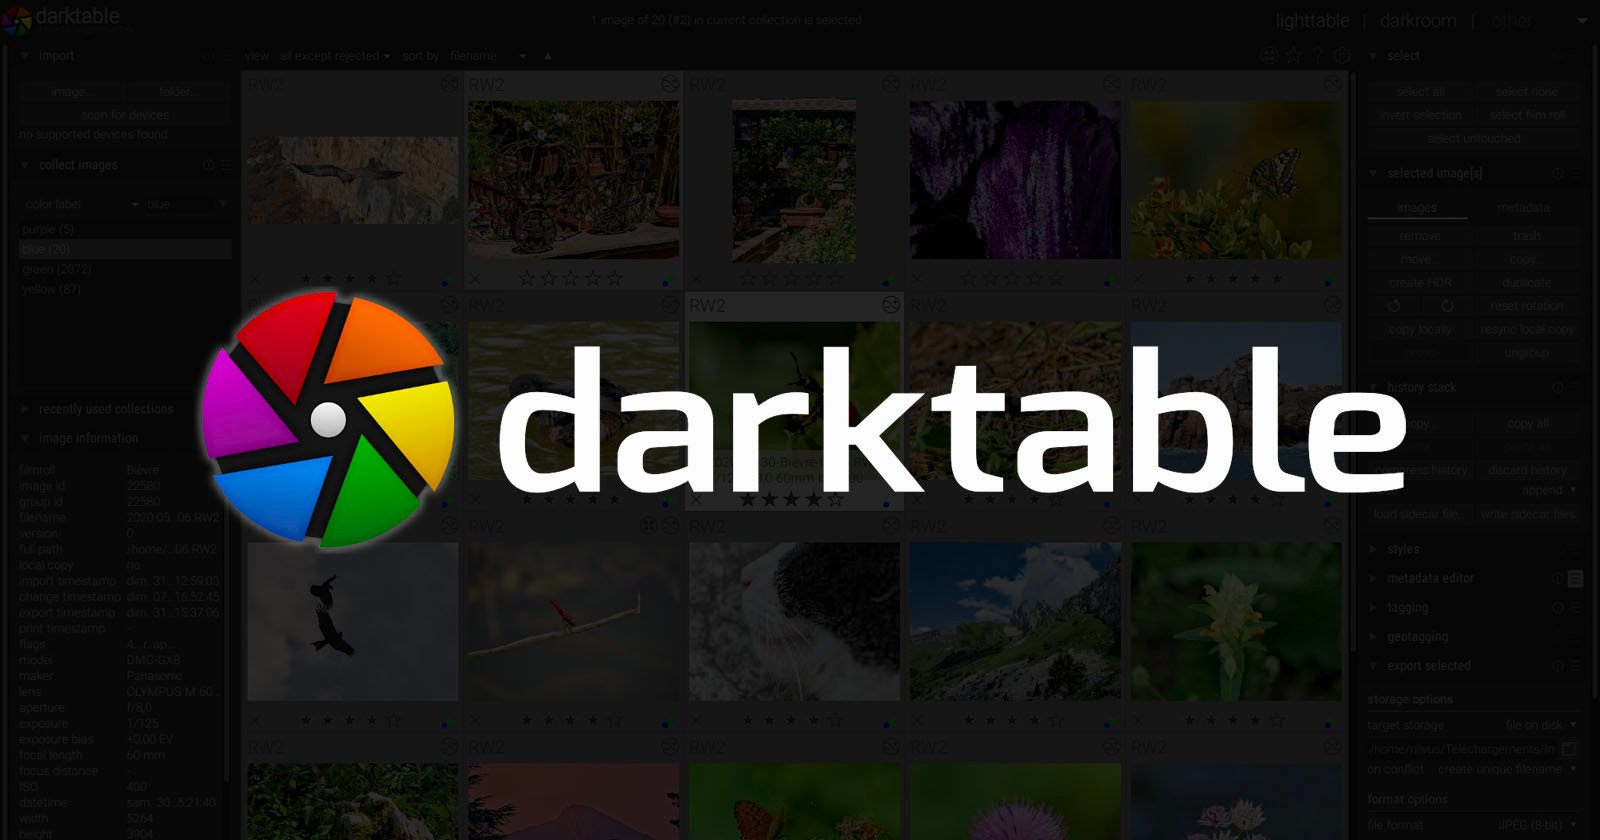 Darktable 4.0 is a Major Update to the Open-Source Lightroom Alternative